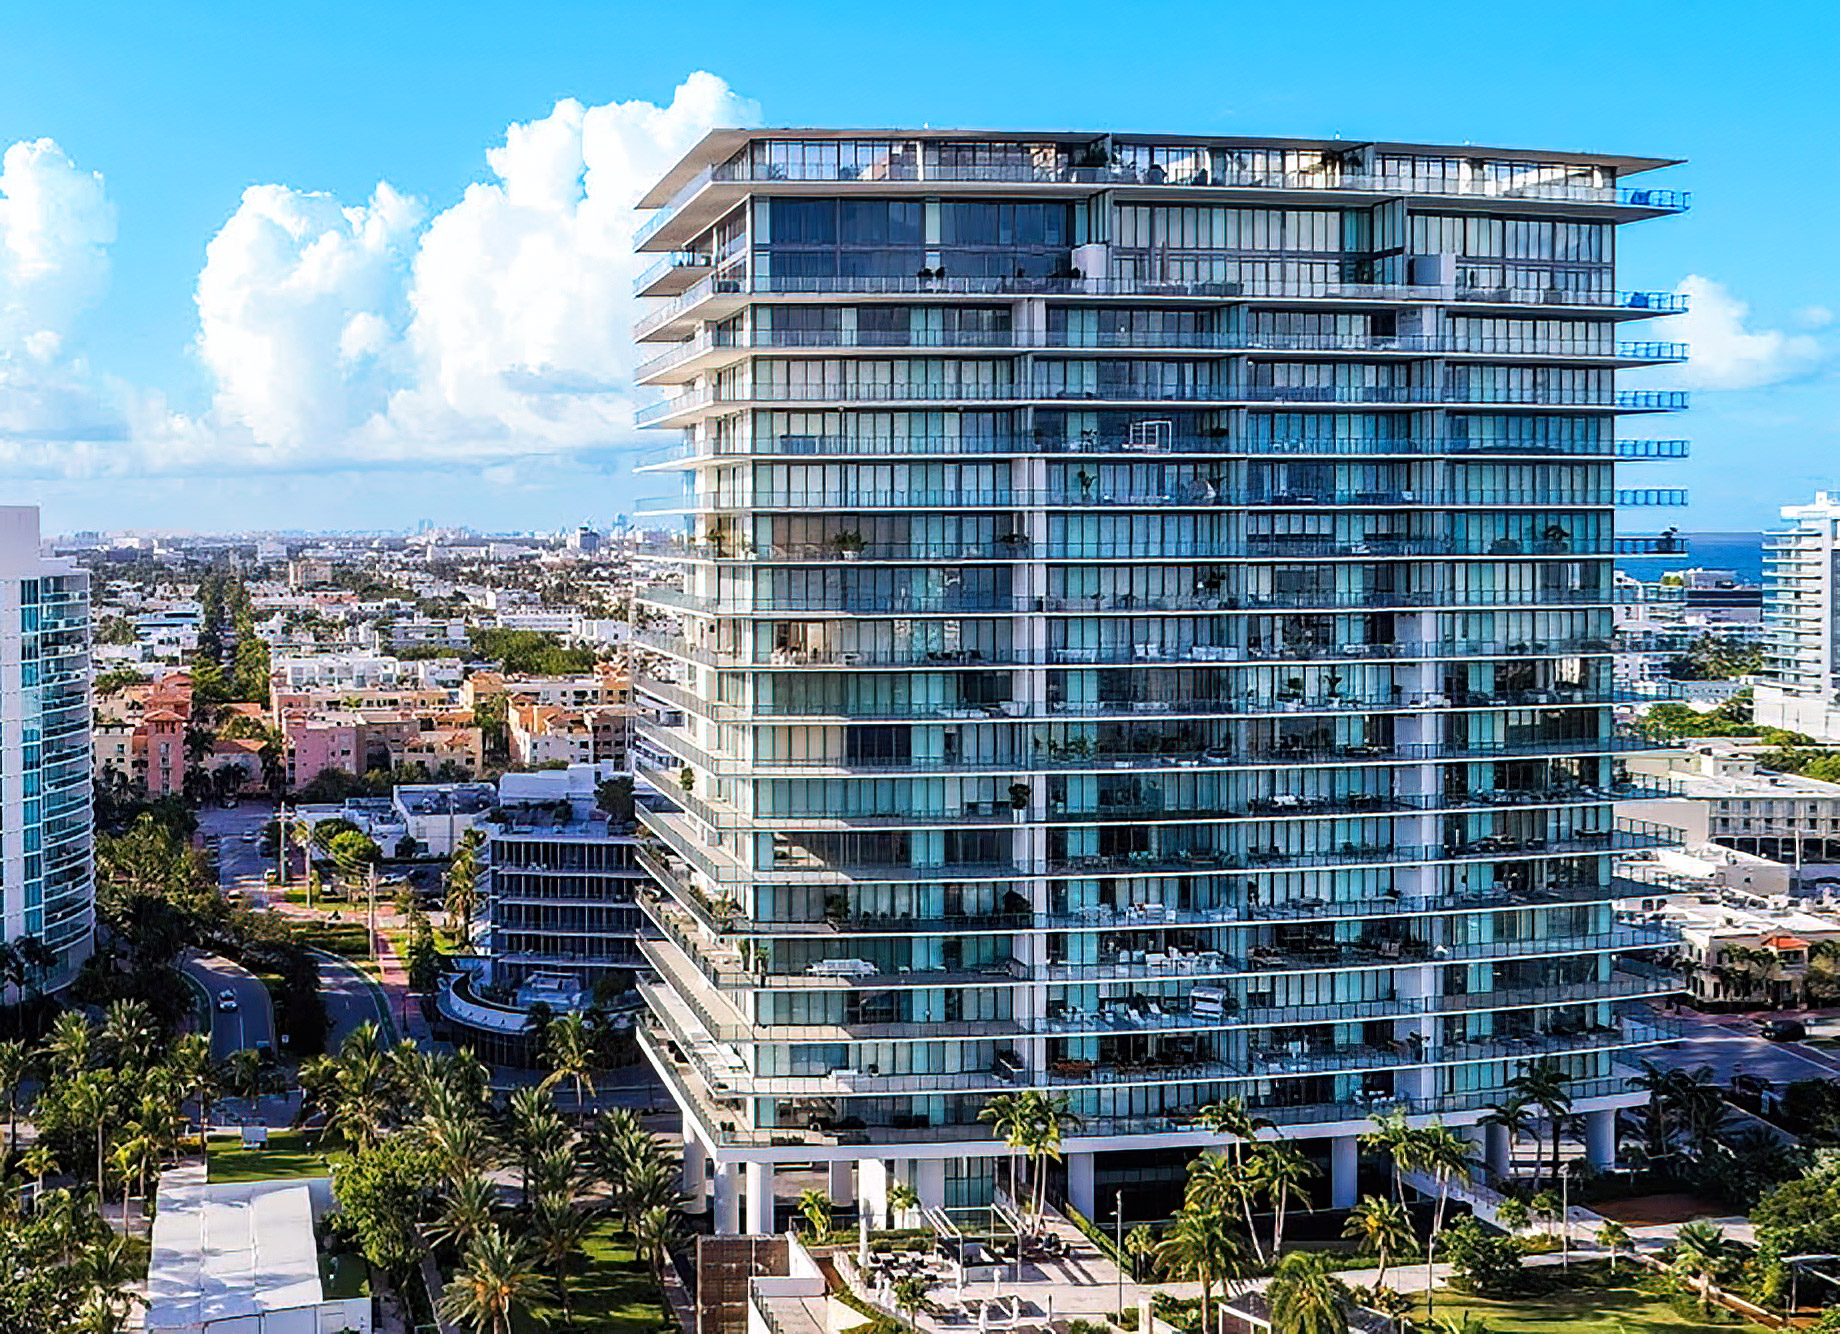 Apogee Condominium - South Beach, Miami, Florida